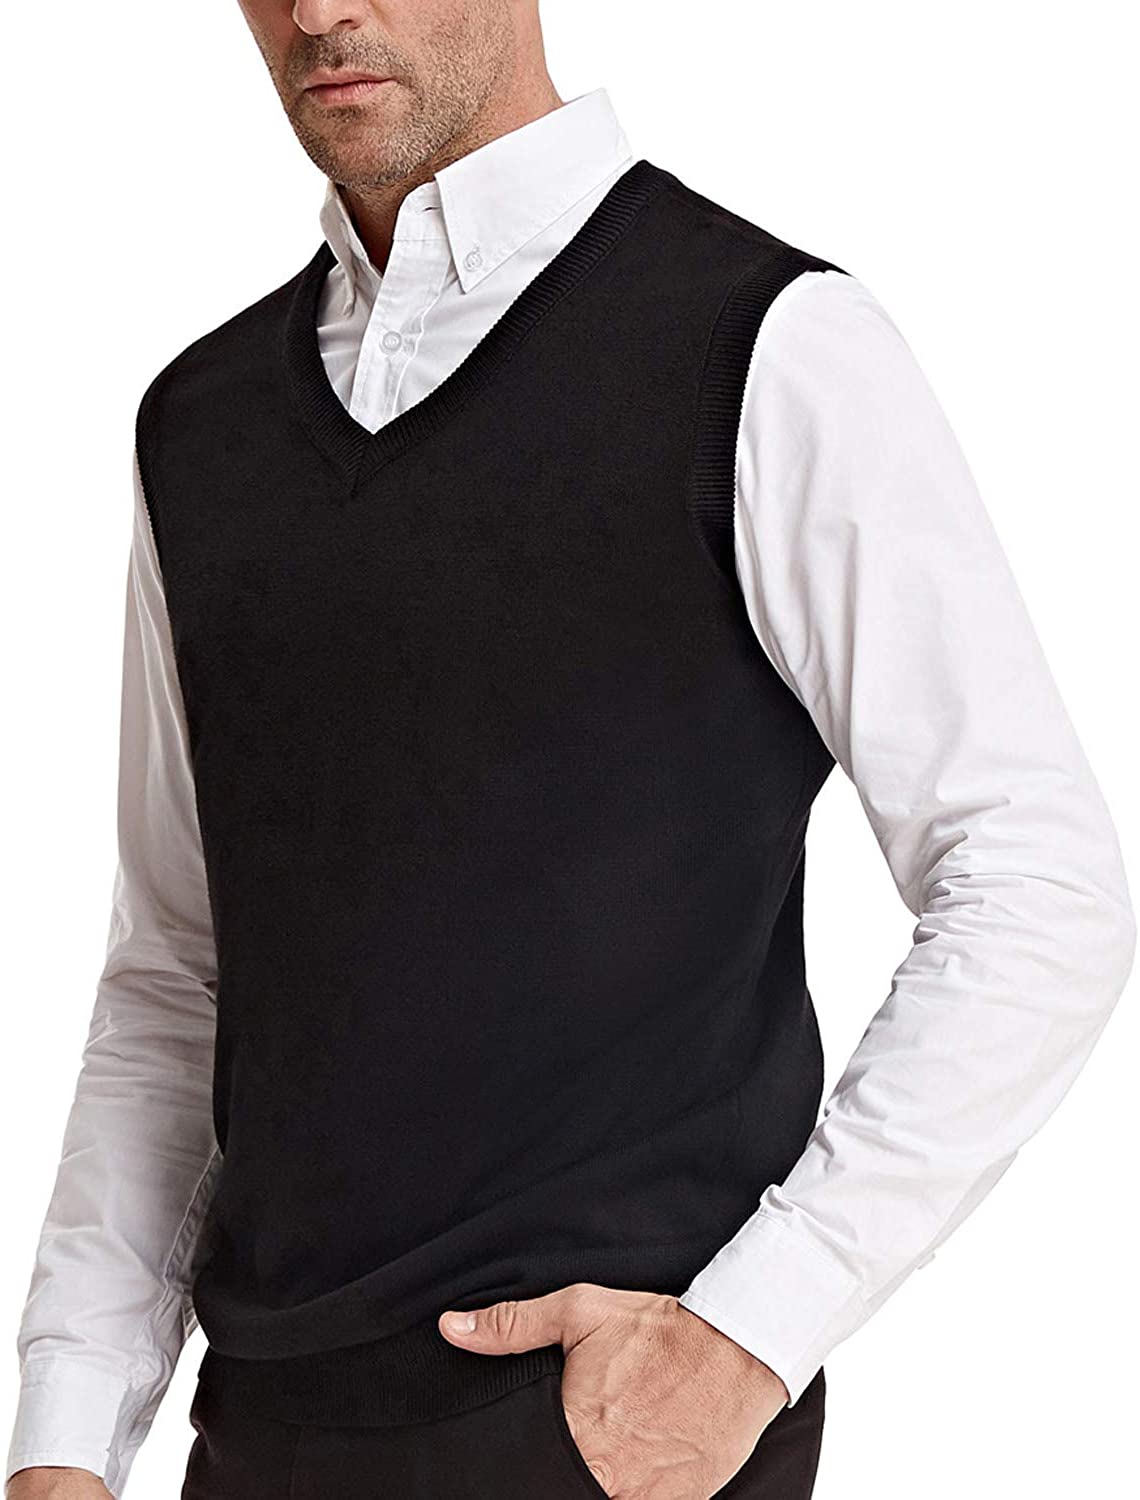 PJ PAUL JONES Mens Cable Knit Sweater Vest V Neck Slim Fit Sleeveless Pullover Sweater Vests 